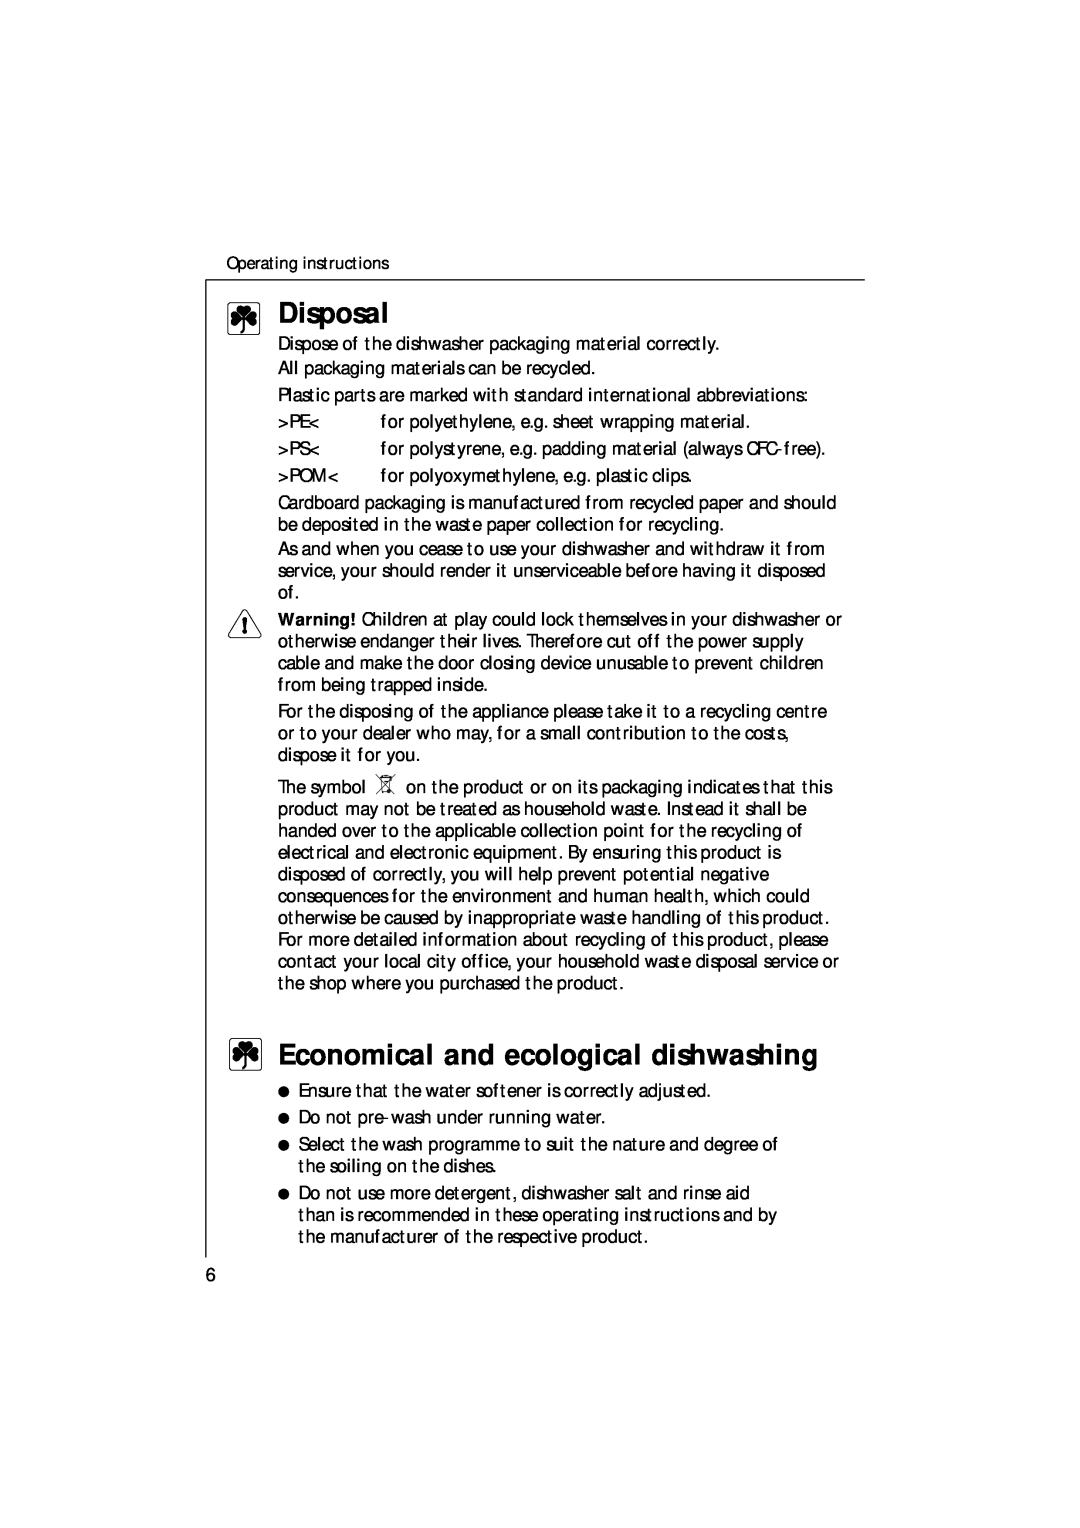 Electrolux U30205 manual Disposal, Economical and ecological dishwashing 